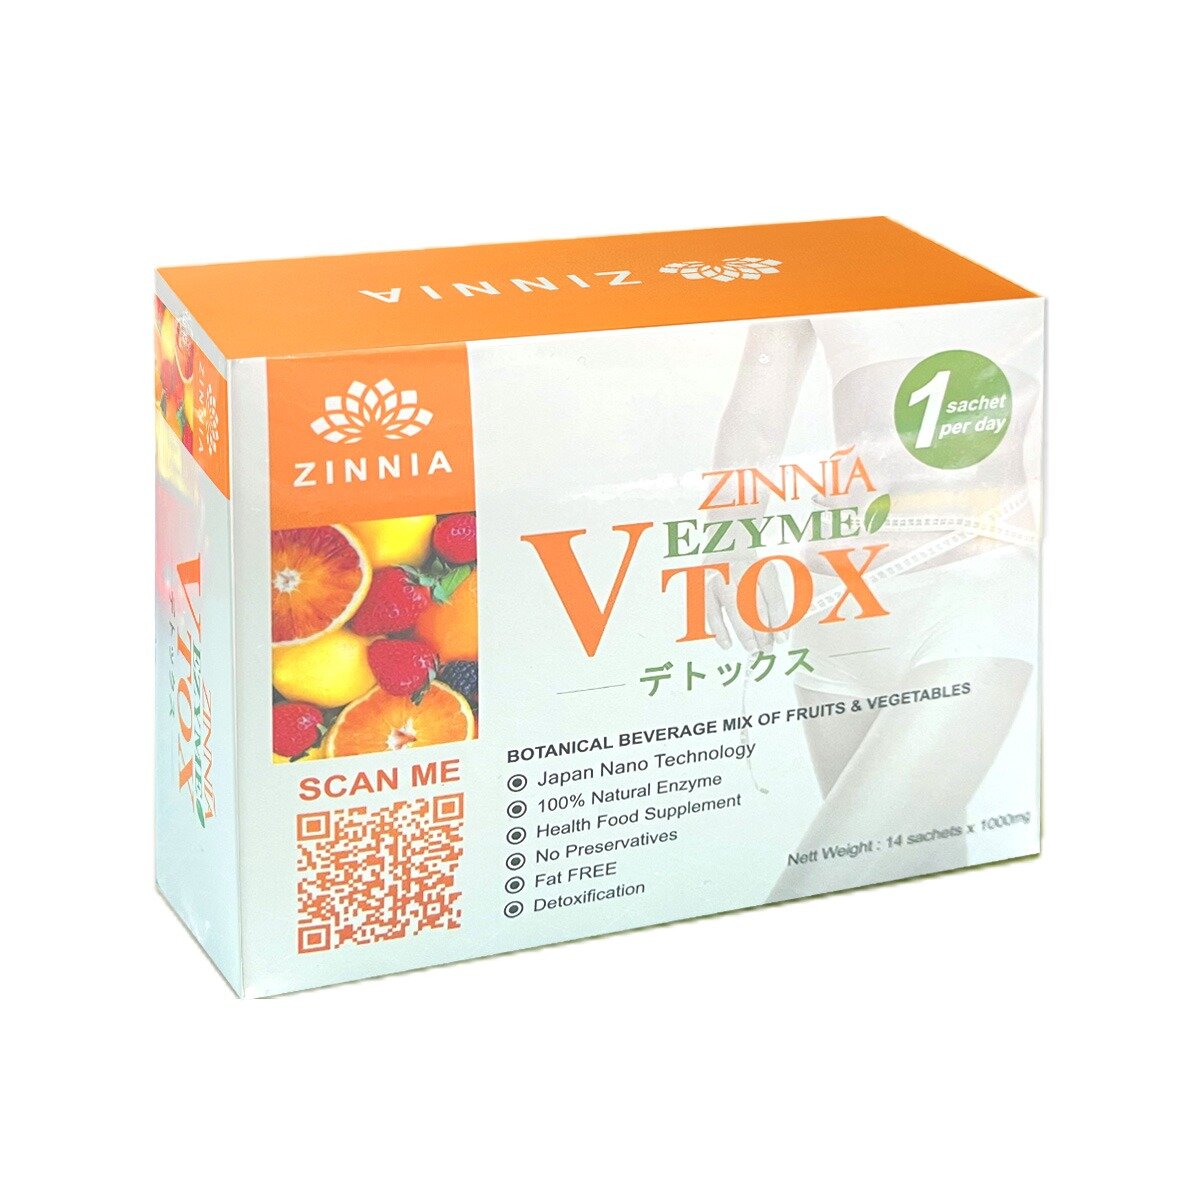 Zinnia VTOX EZYME Natural Detox Enzyme 1000mg x 1 box (14 sachets)